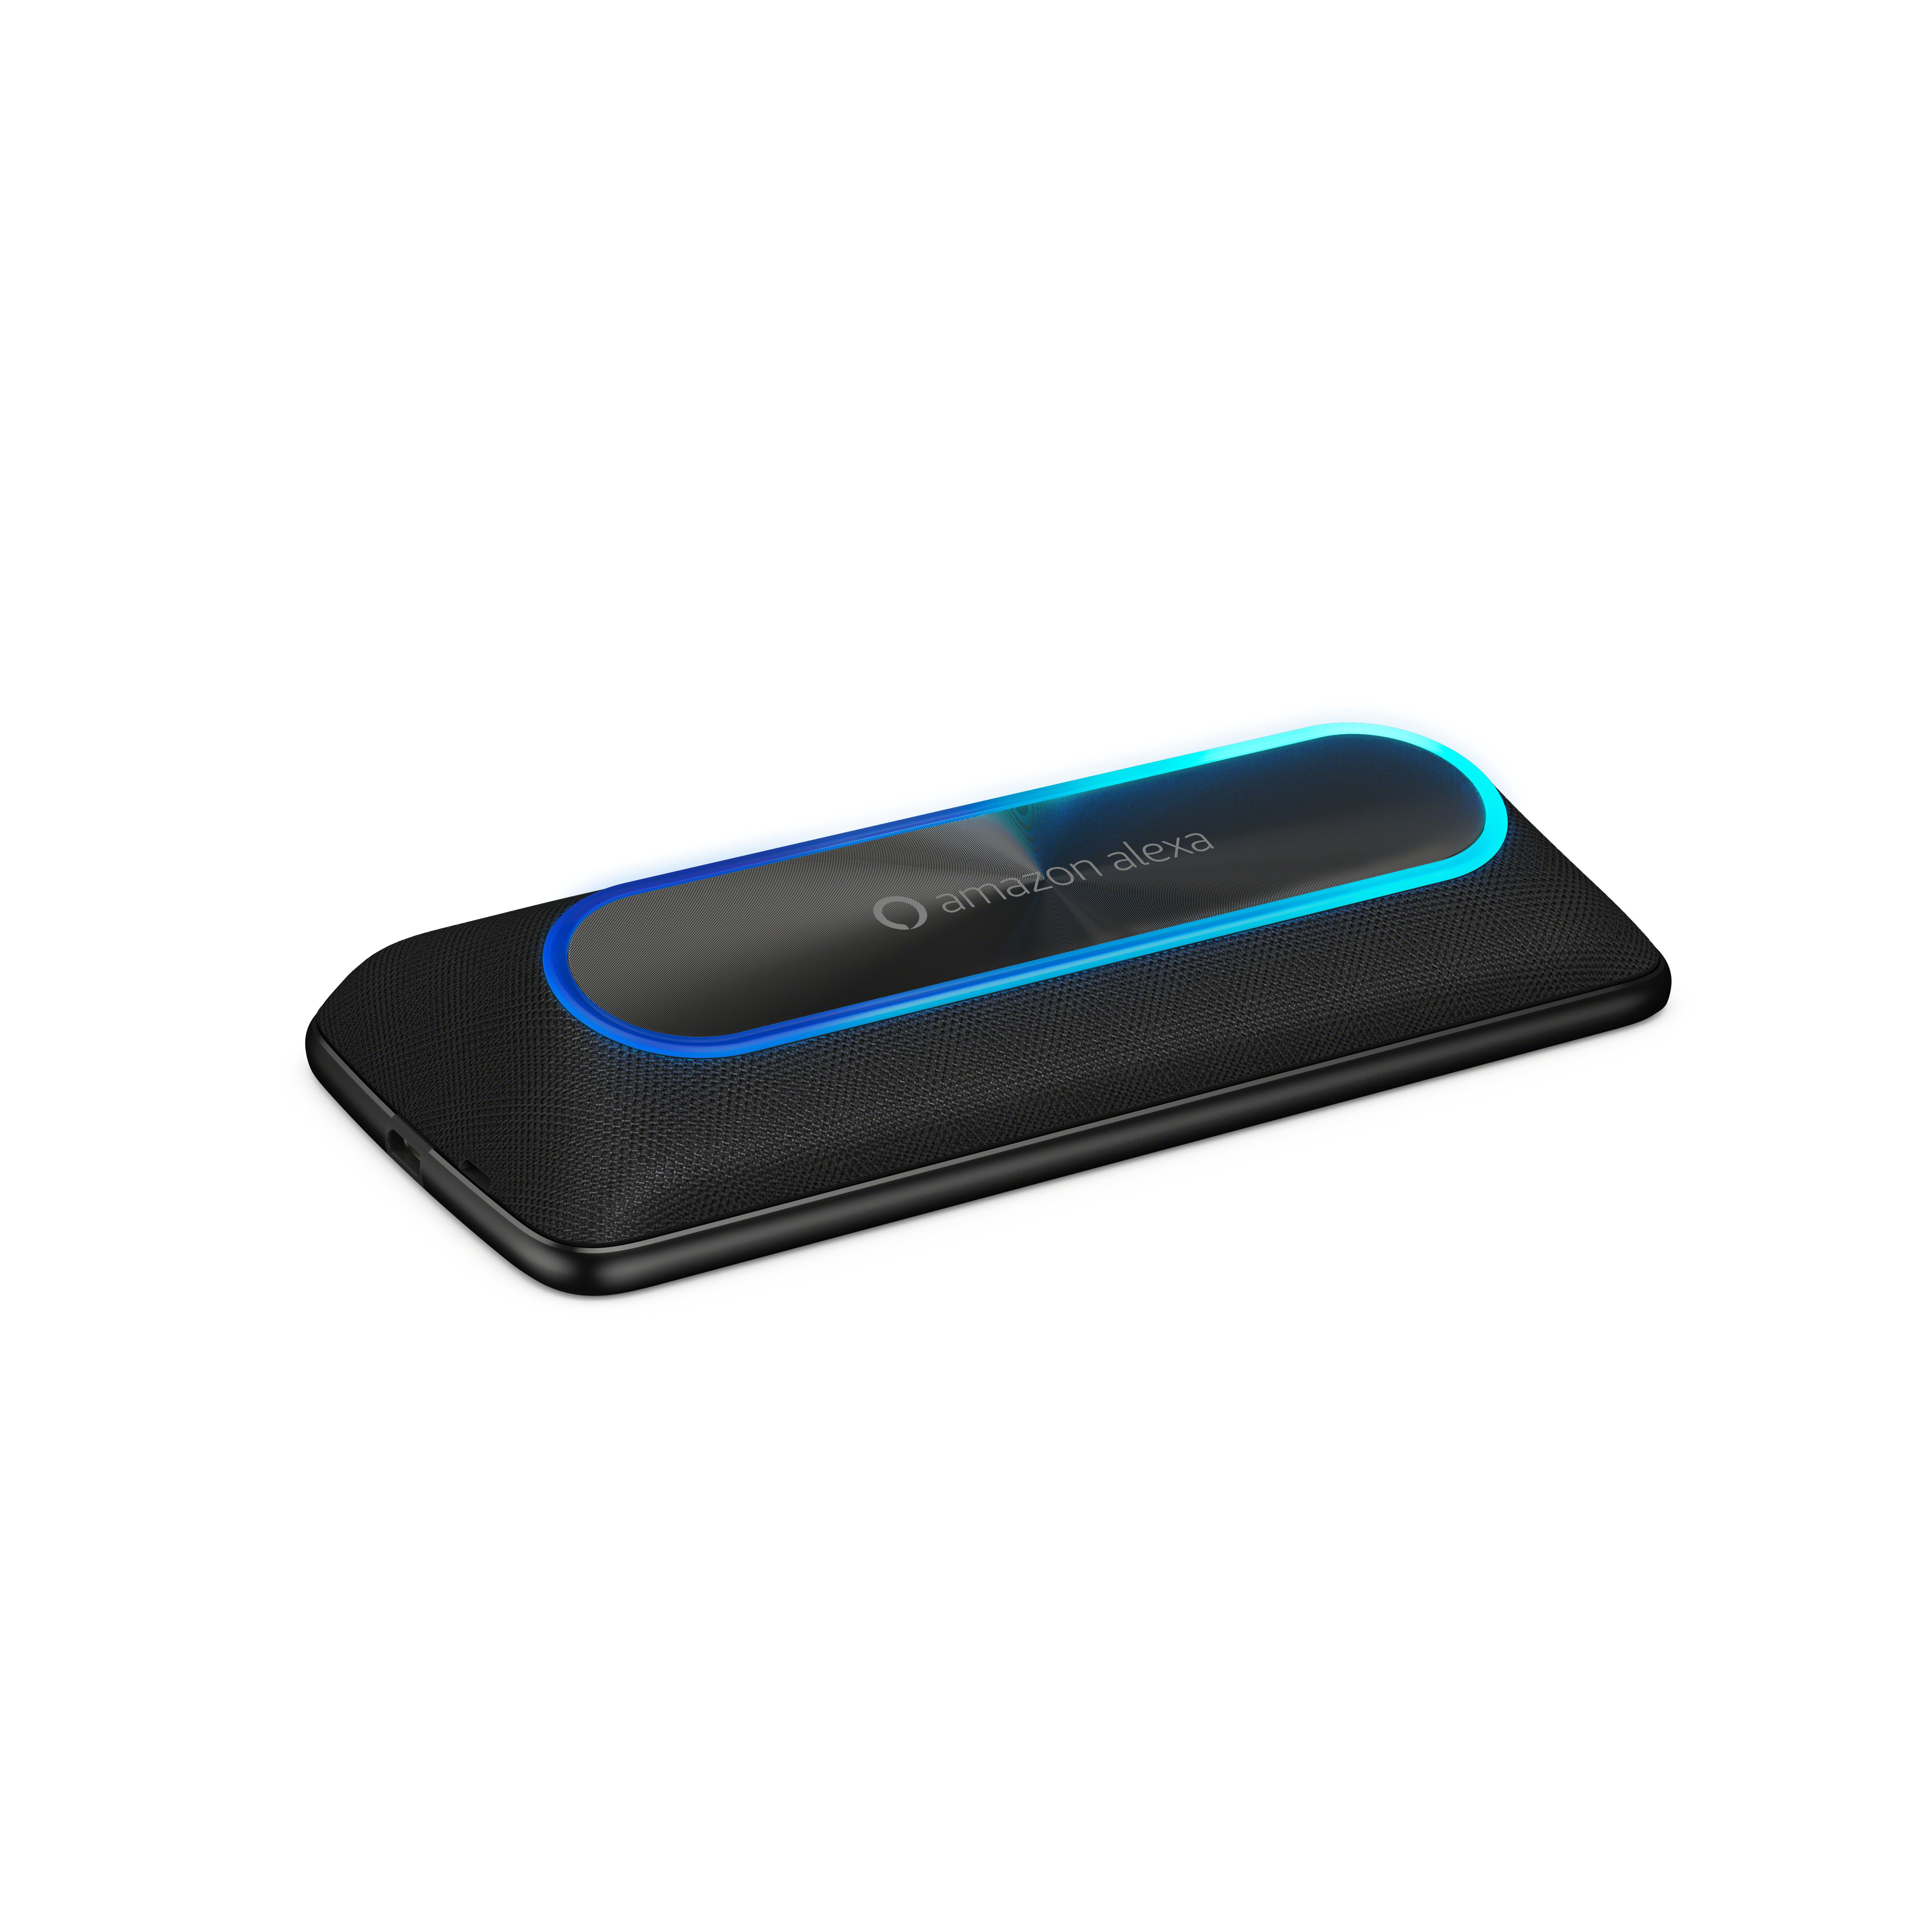 Moto Smart Speaker med Amazon Alexa, nedåt med indikatorlampan tänd